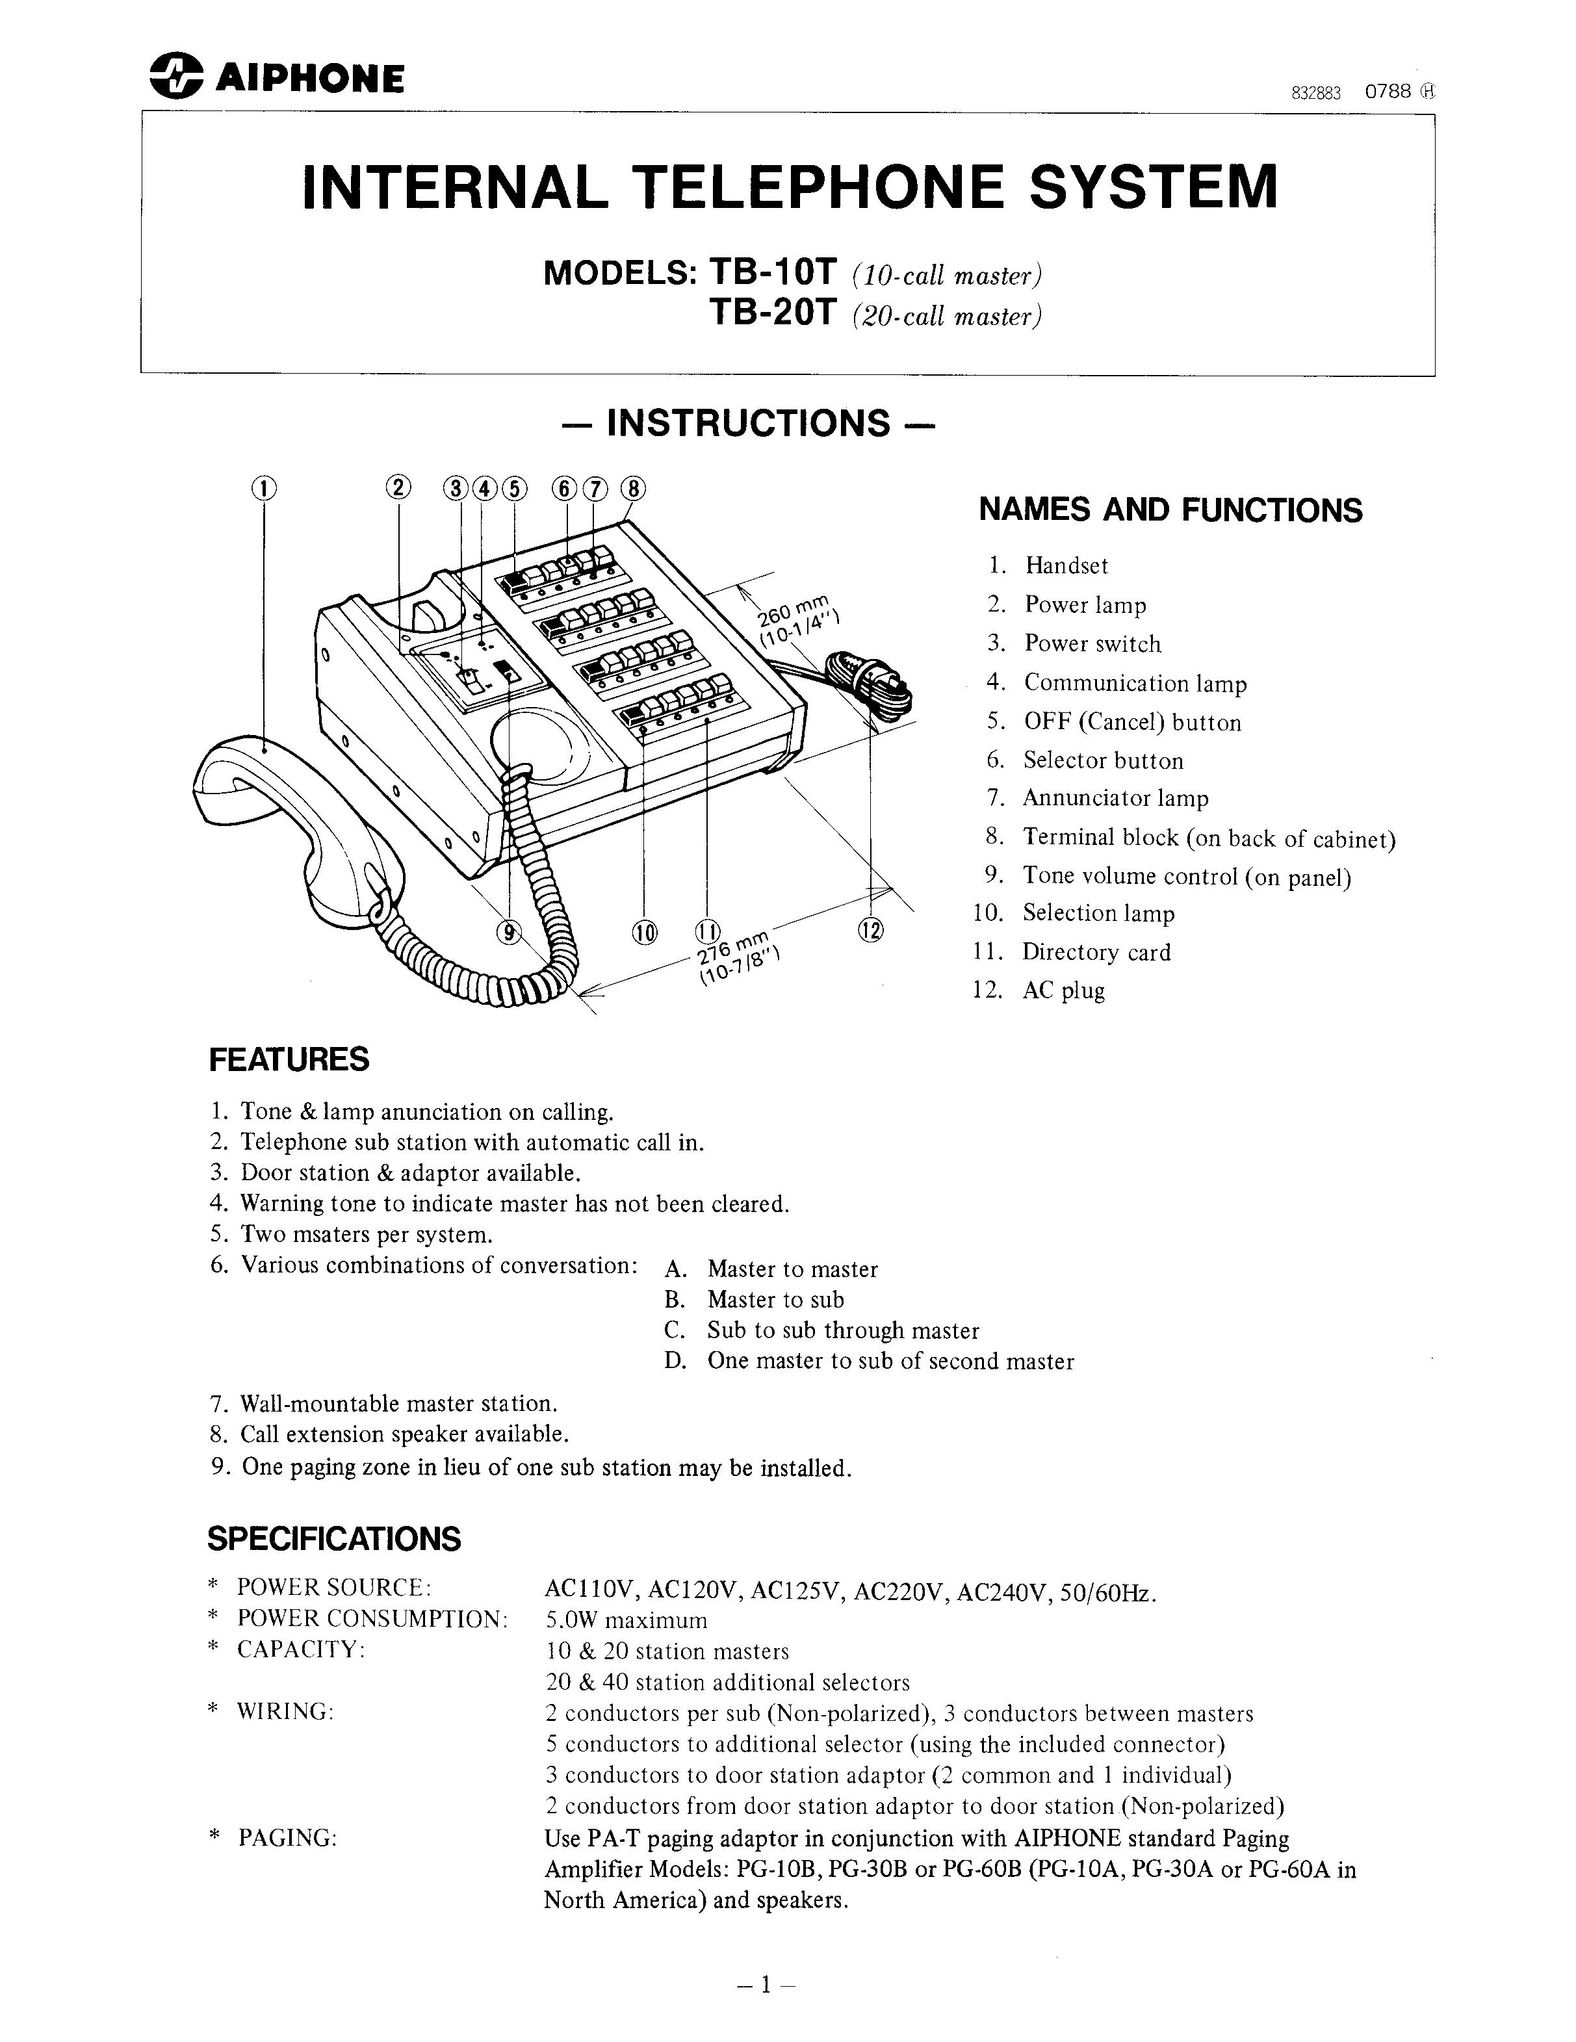 Aiphone TB-10T Telephone User Manual